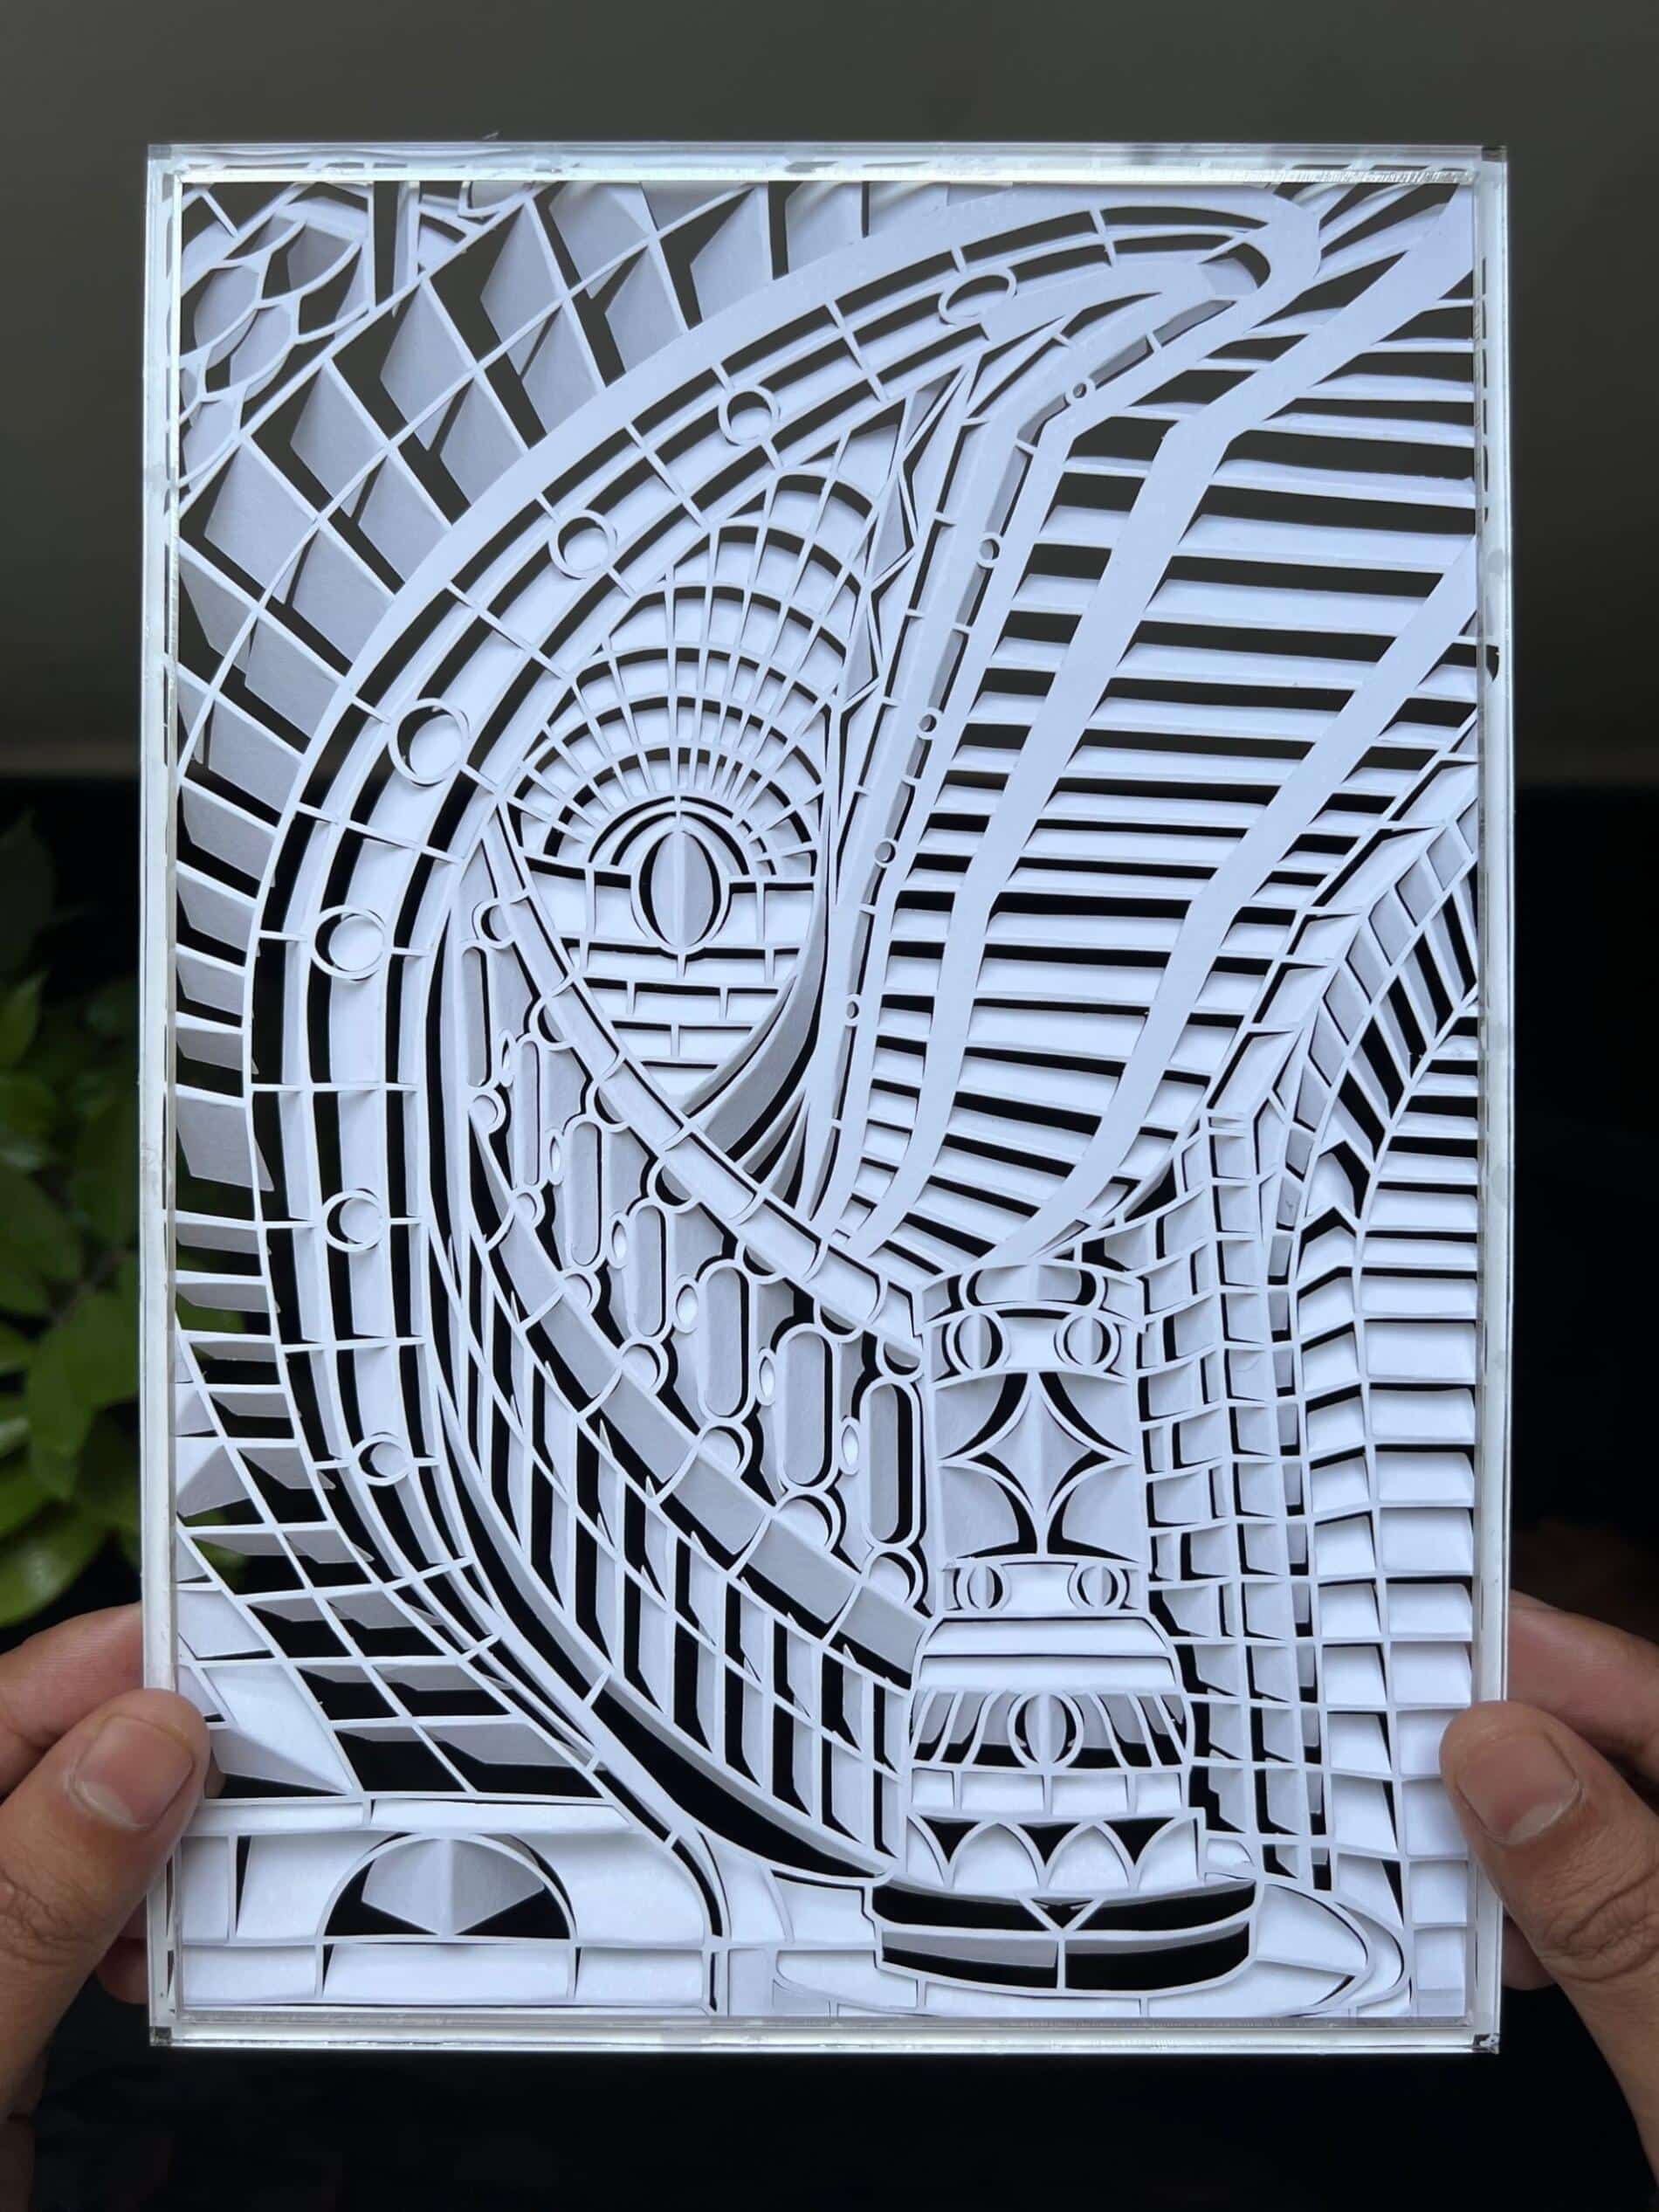 Parth Kothekar arte de papel ilusiones opticas